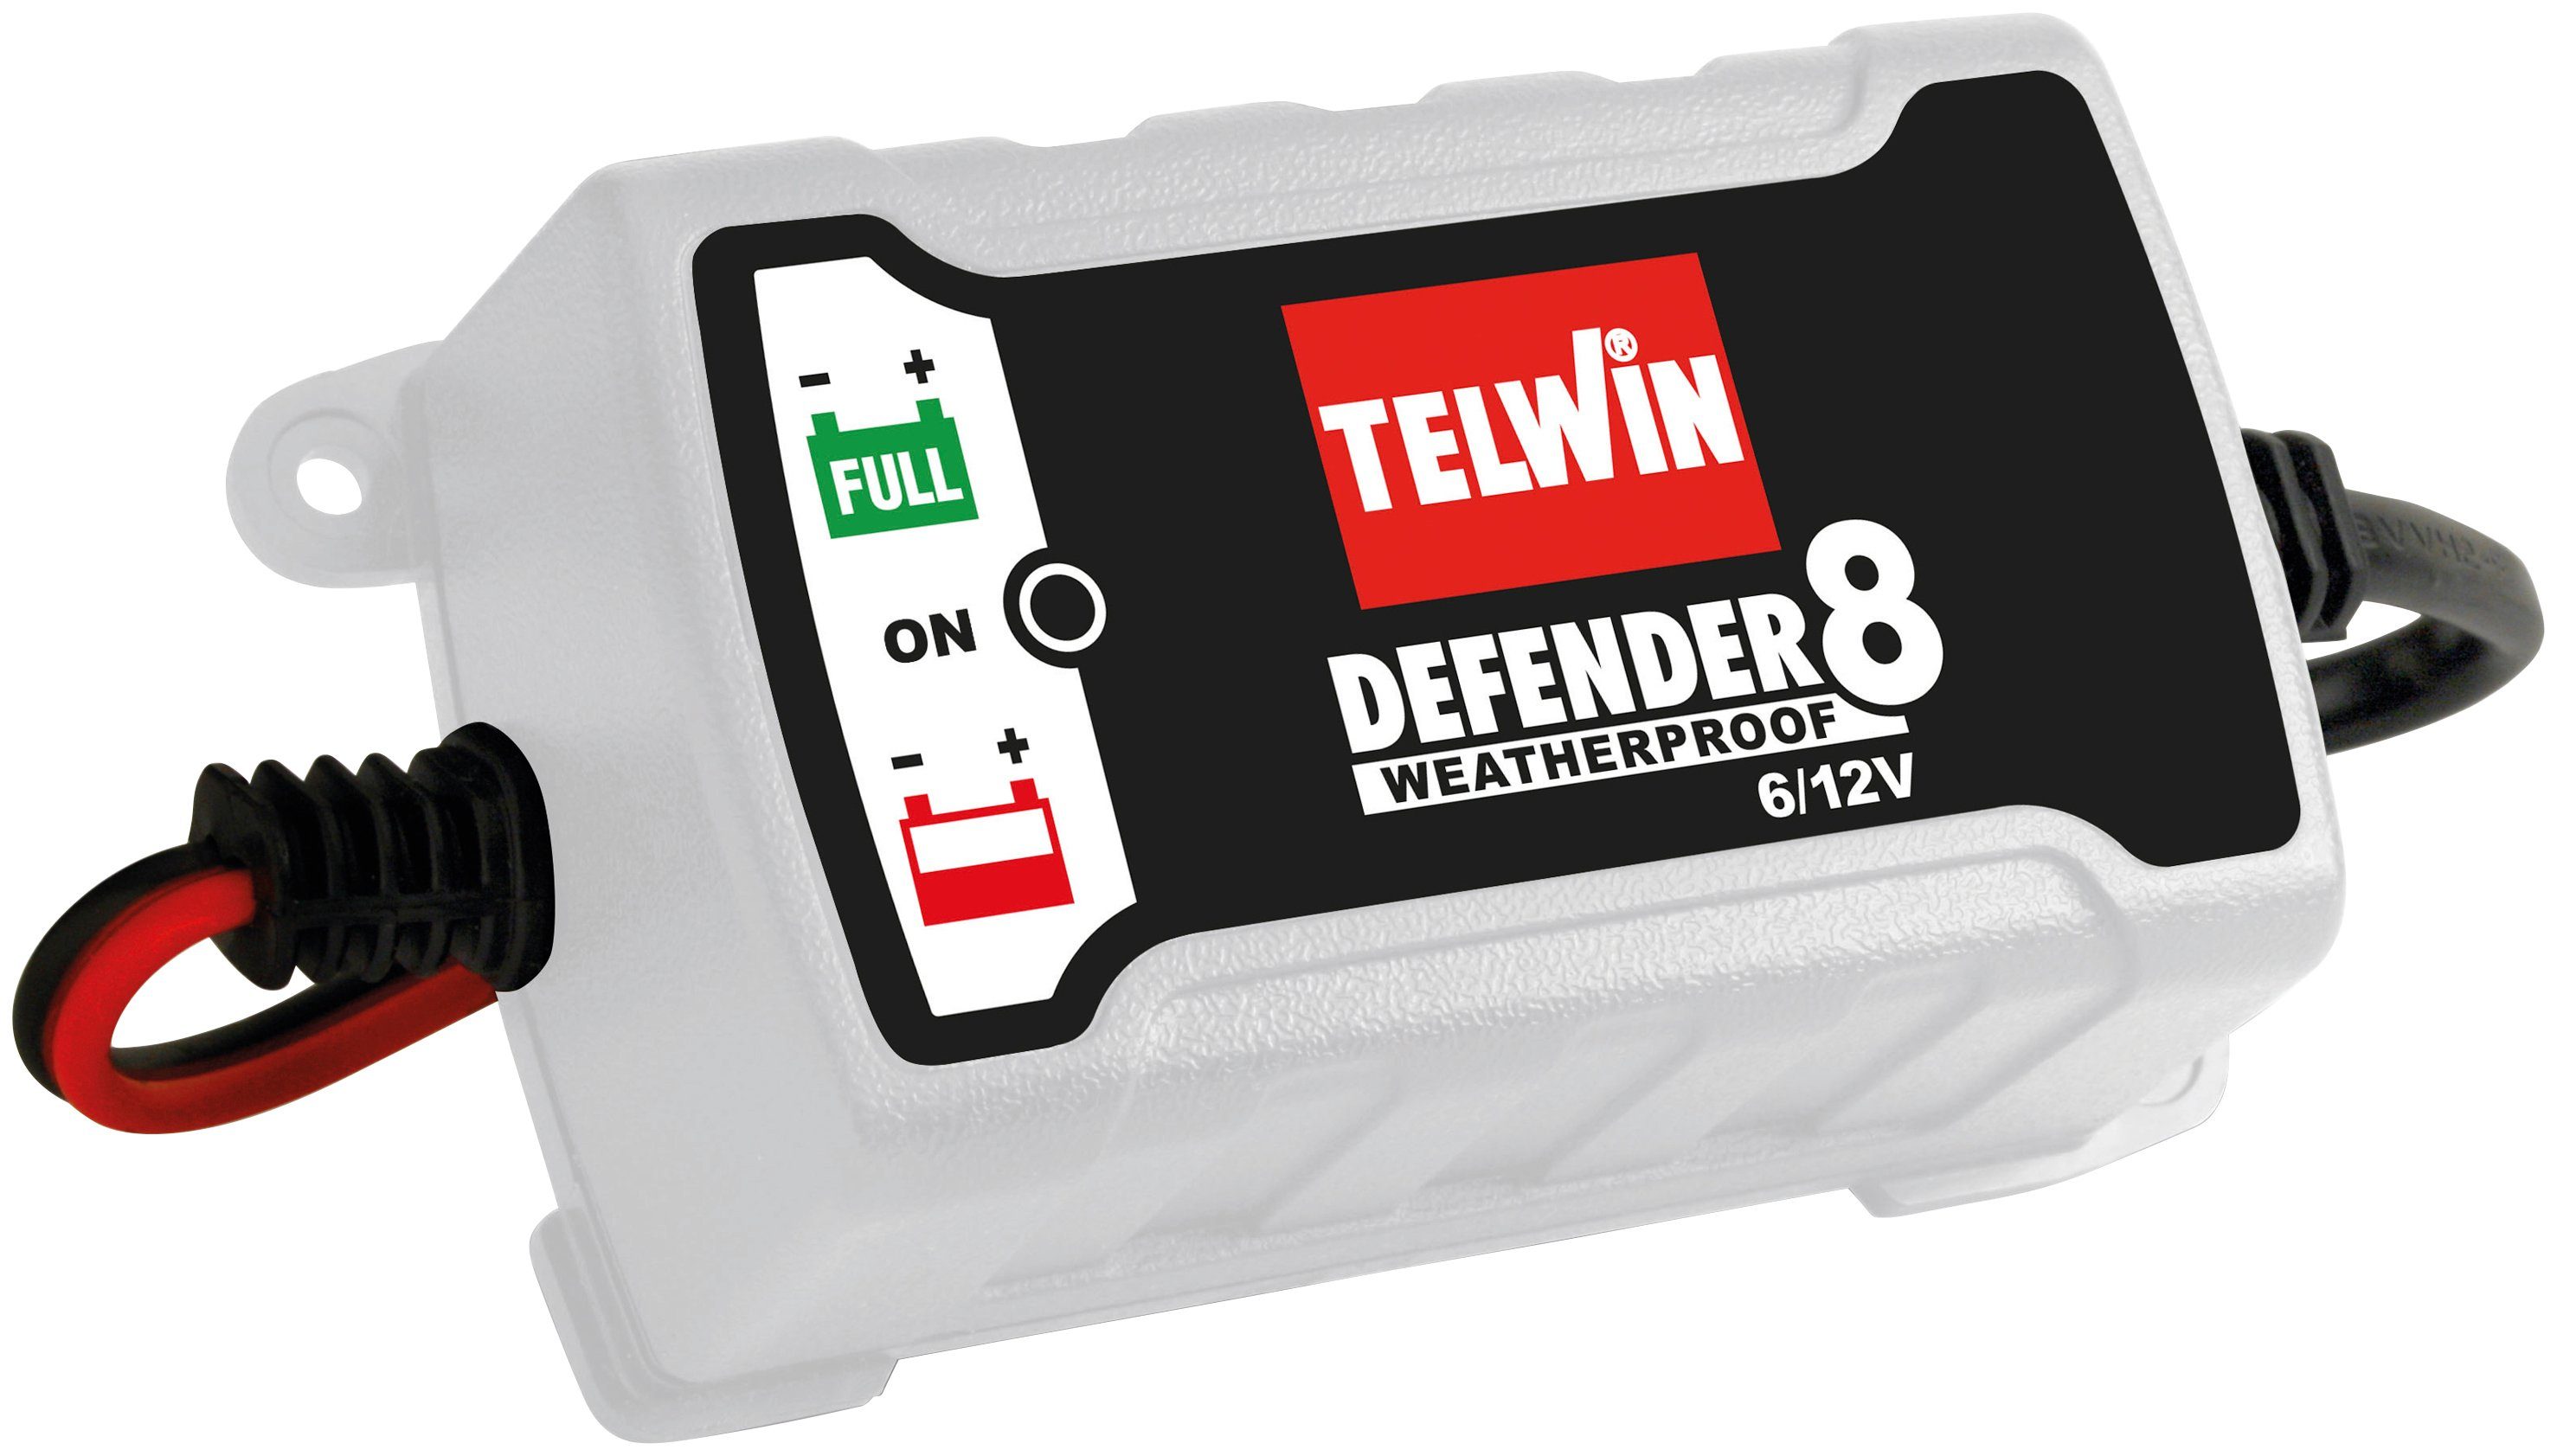 TELWIN DEFENDER 12 Autobatterie-Ladegerät (Spannung: Ladestrom: 6V / A) 12V, 2/4